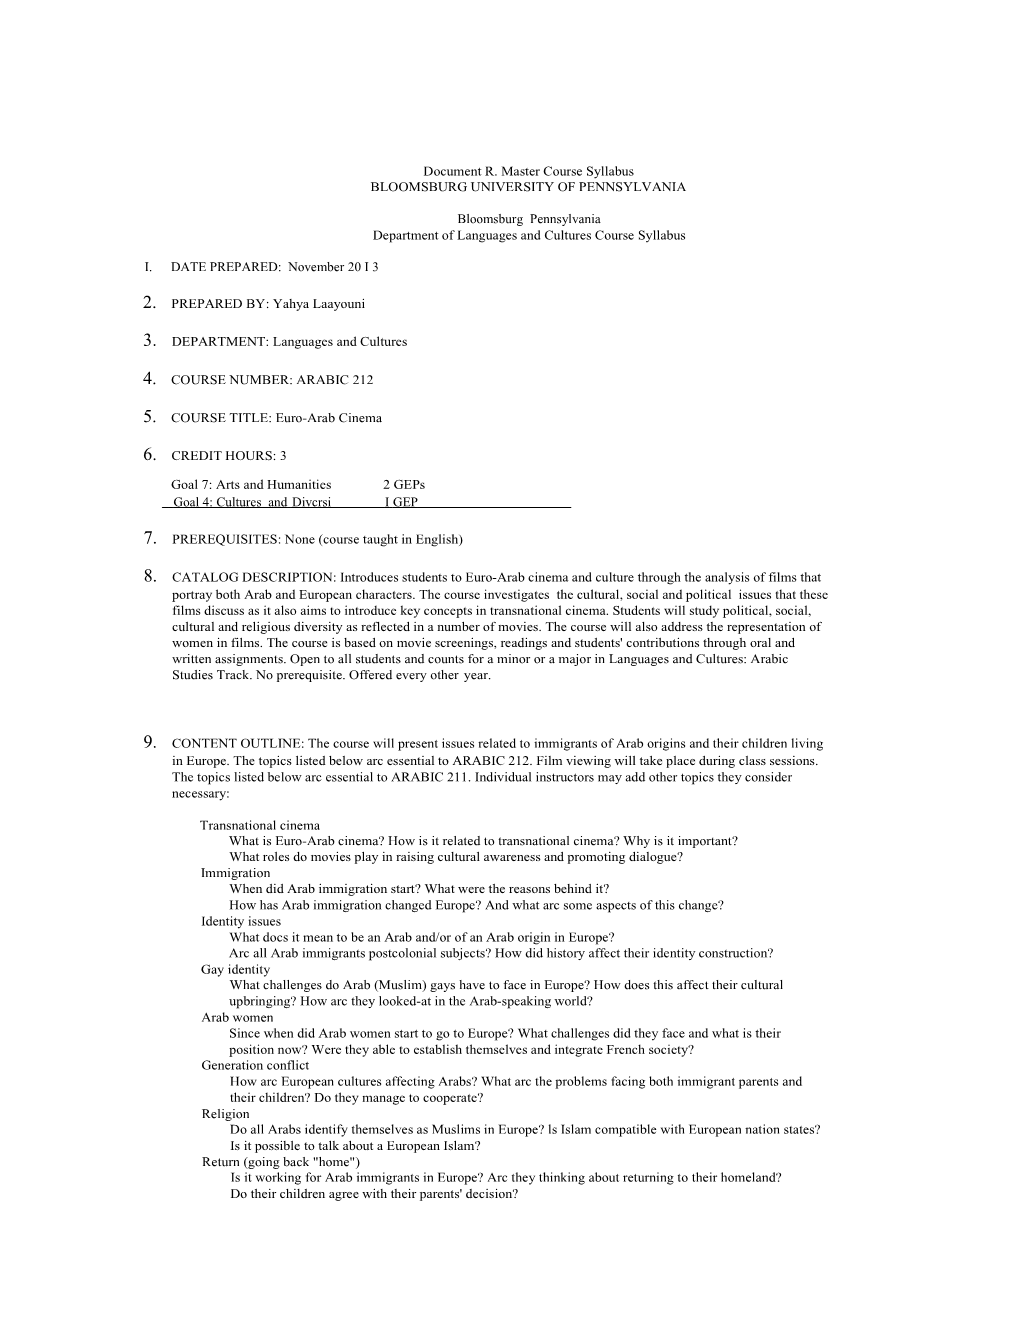 Document R. Master Course Syllabus BLOOMSBURG UNIVERSITY of PENNSYLVANIA